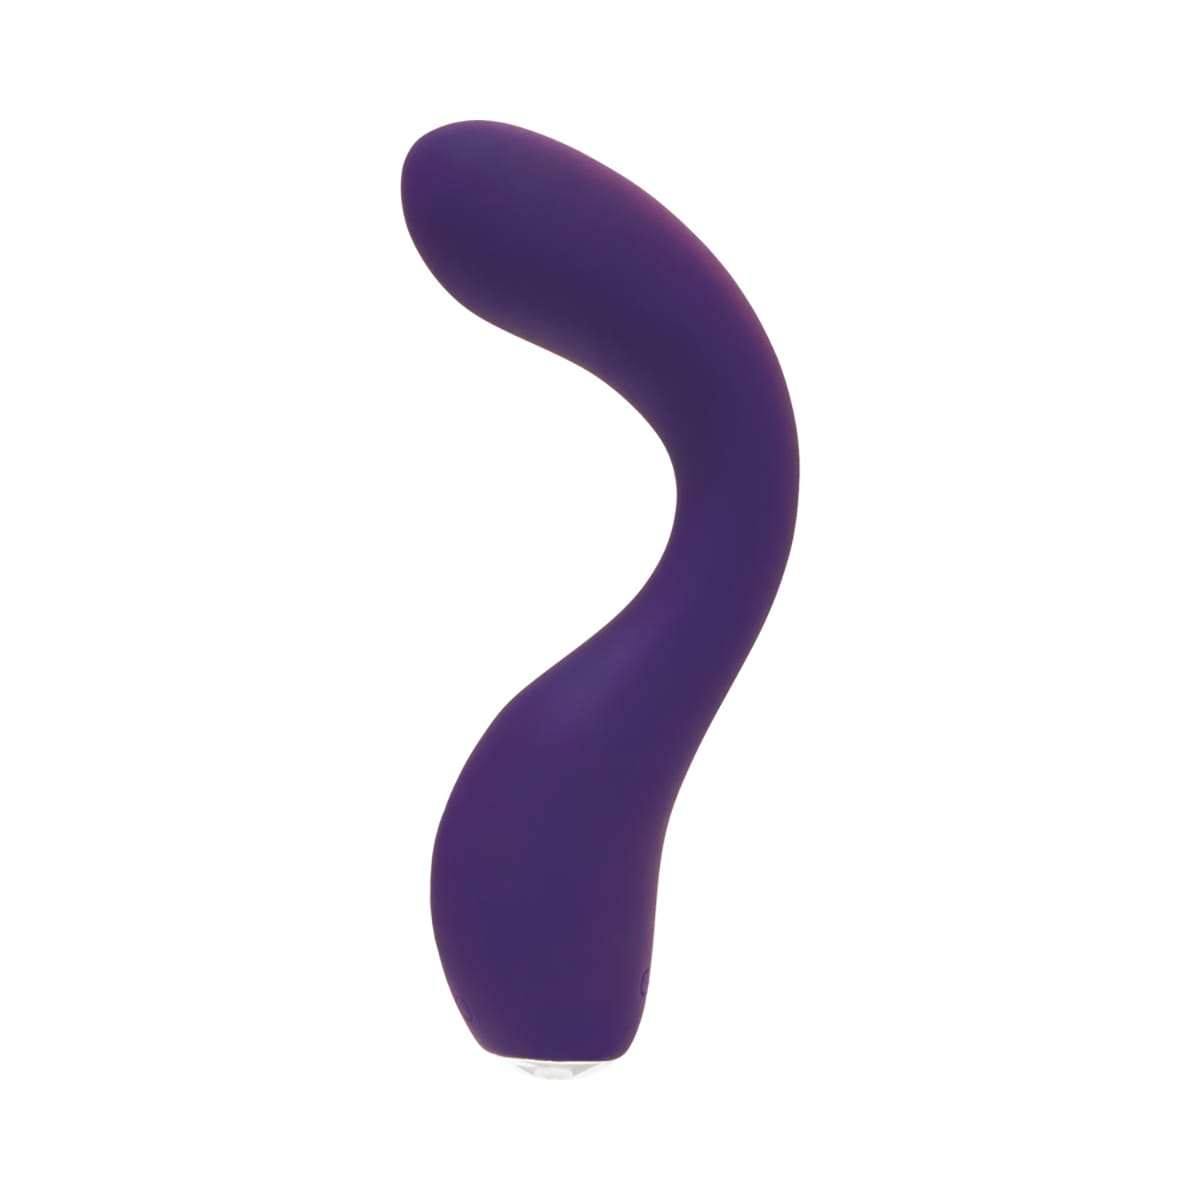 Buy a VeDO Desire Rechargeable G-Spot Vibe Purple vibrator.